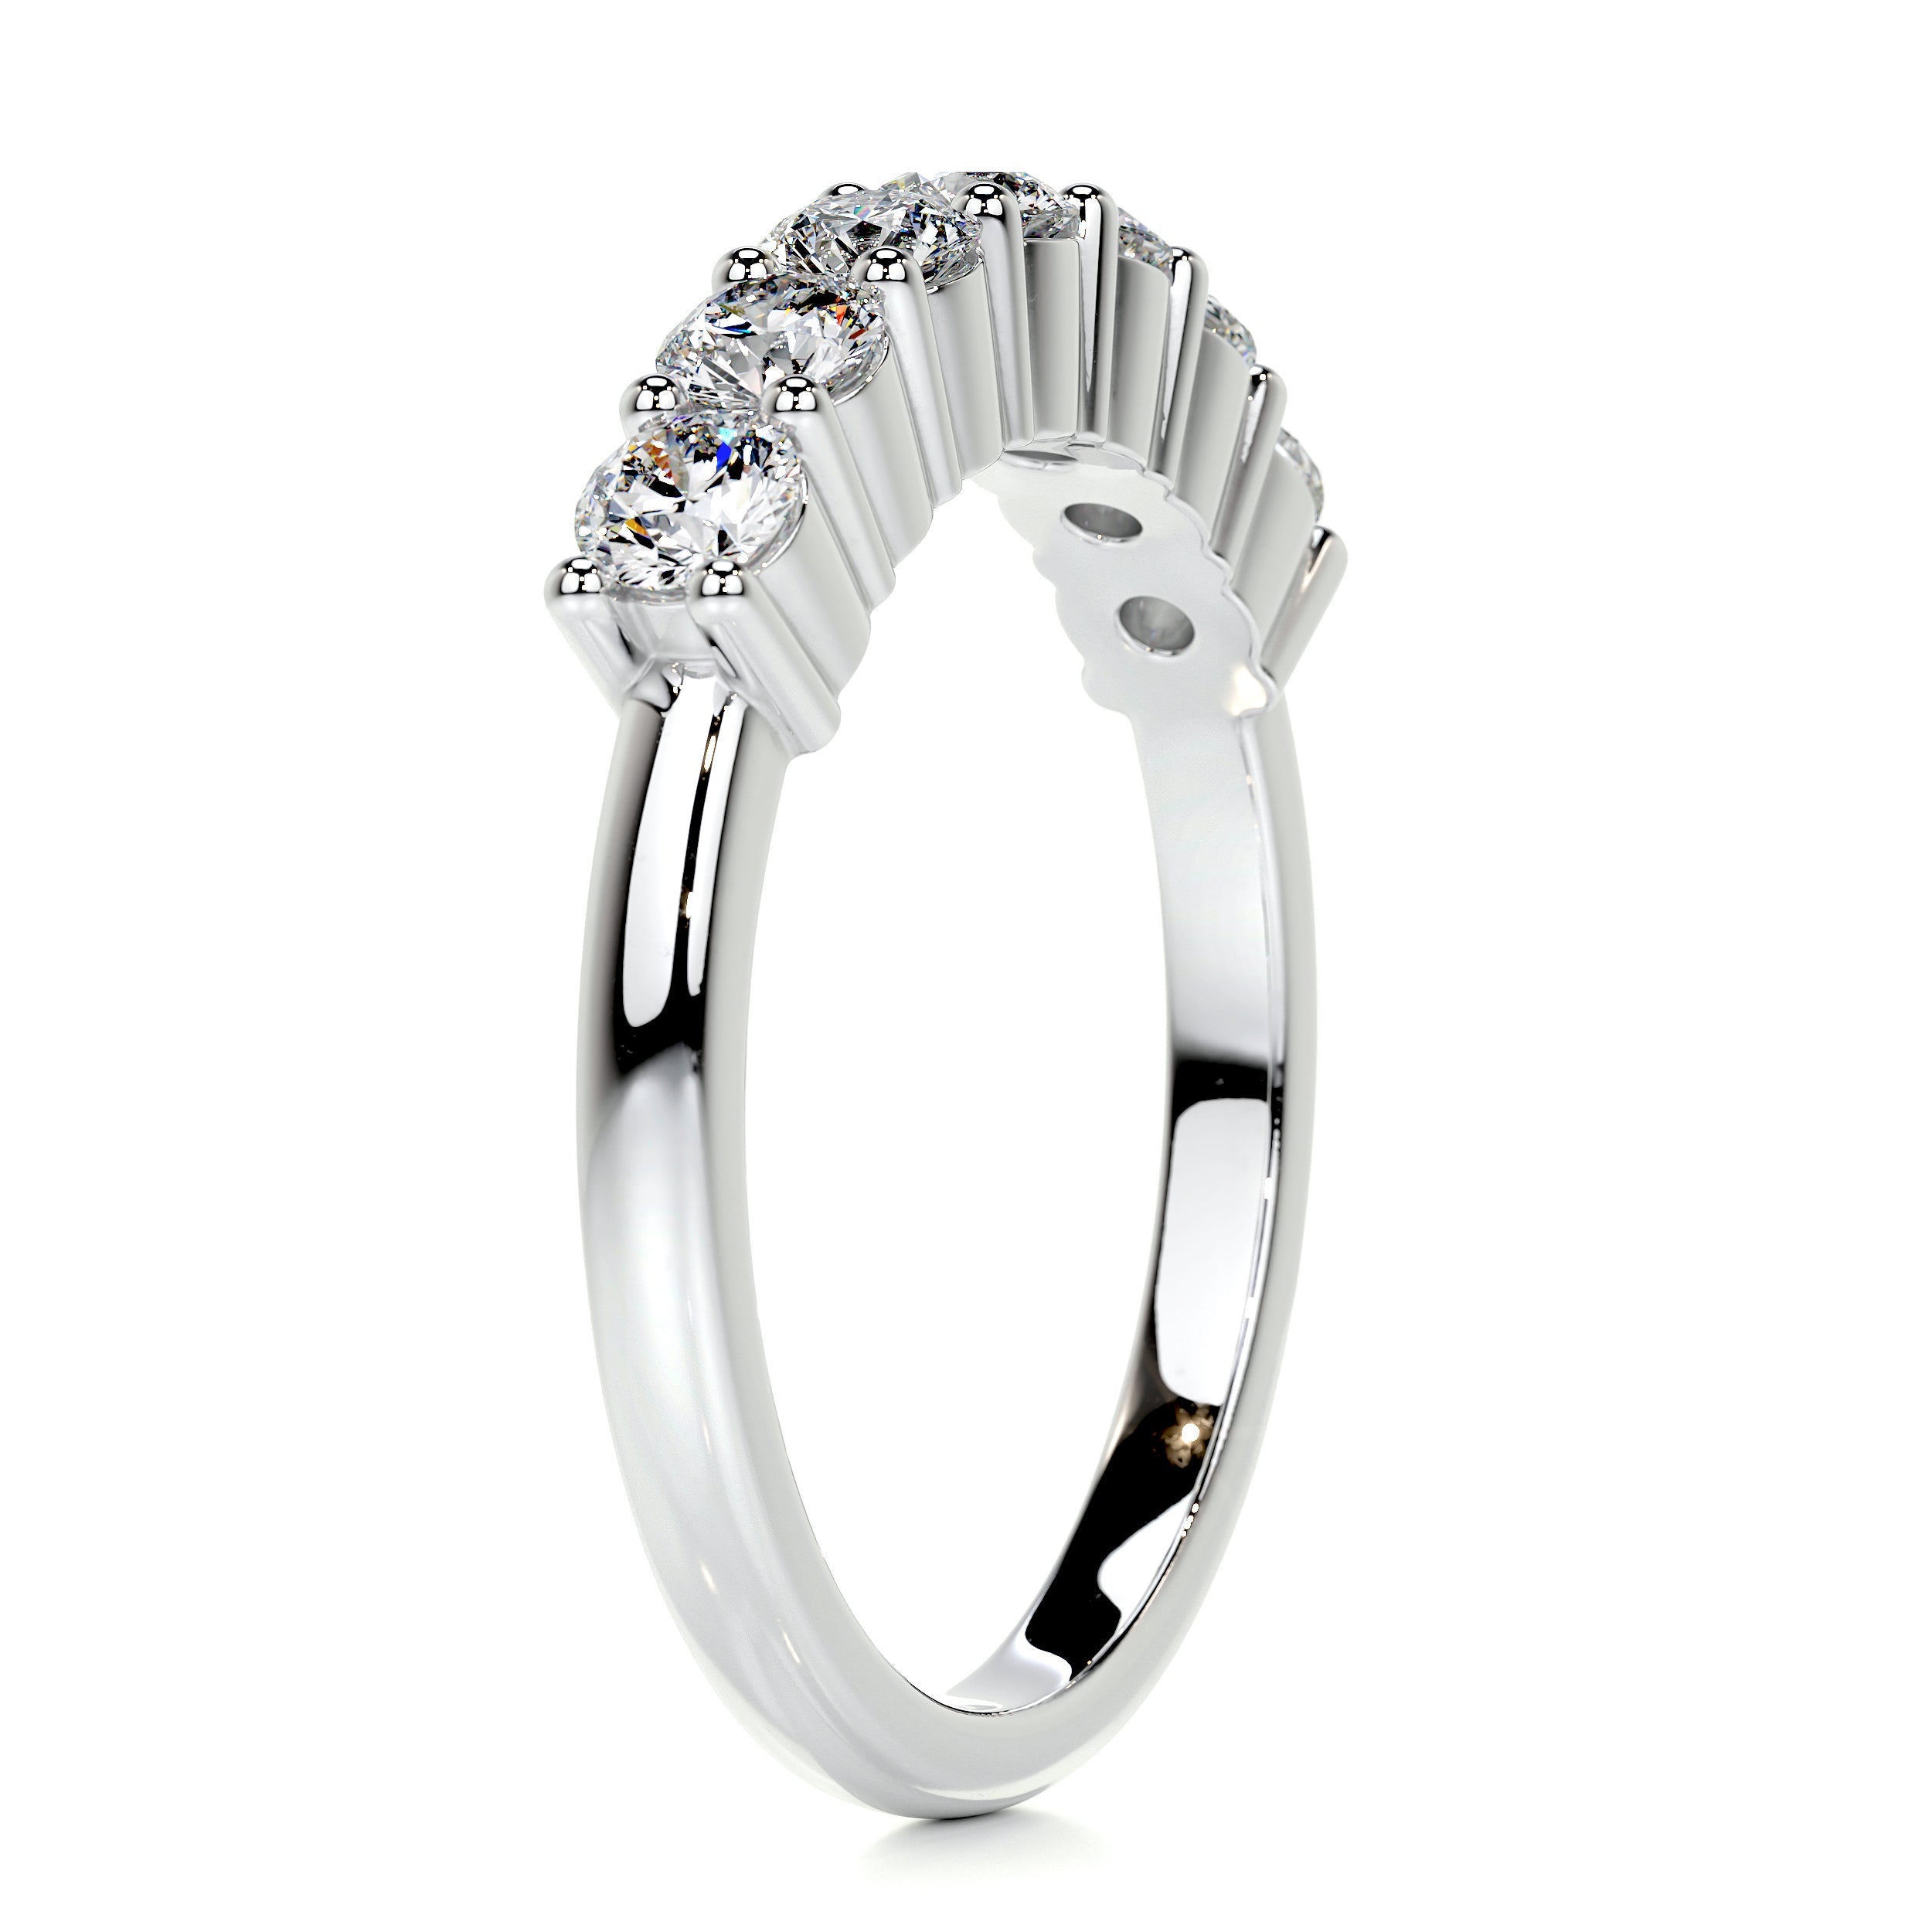 Catherine Diamond Wedding Ring   (0.75 Carat) -14K White Gold (RTS)